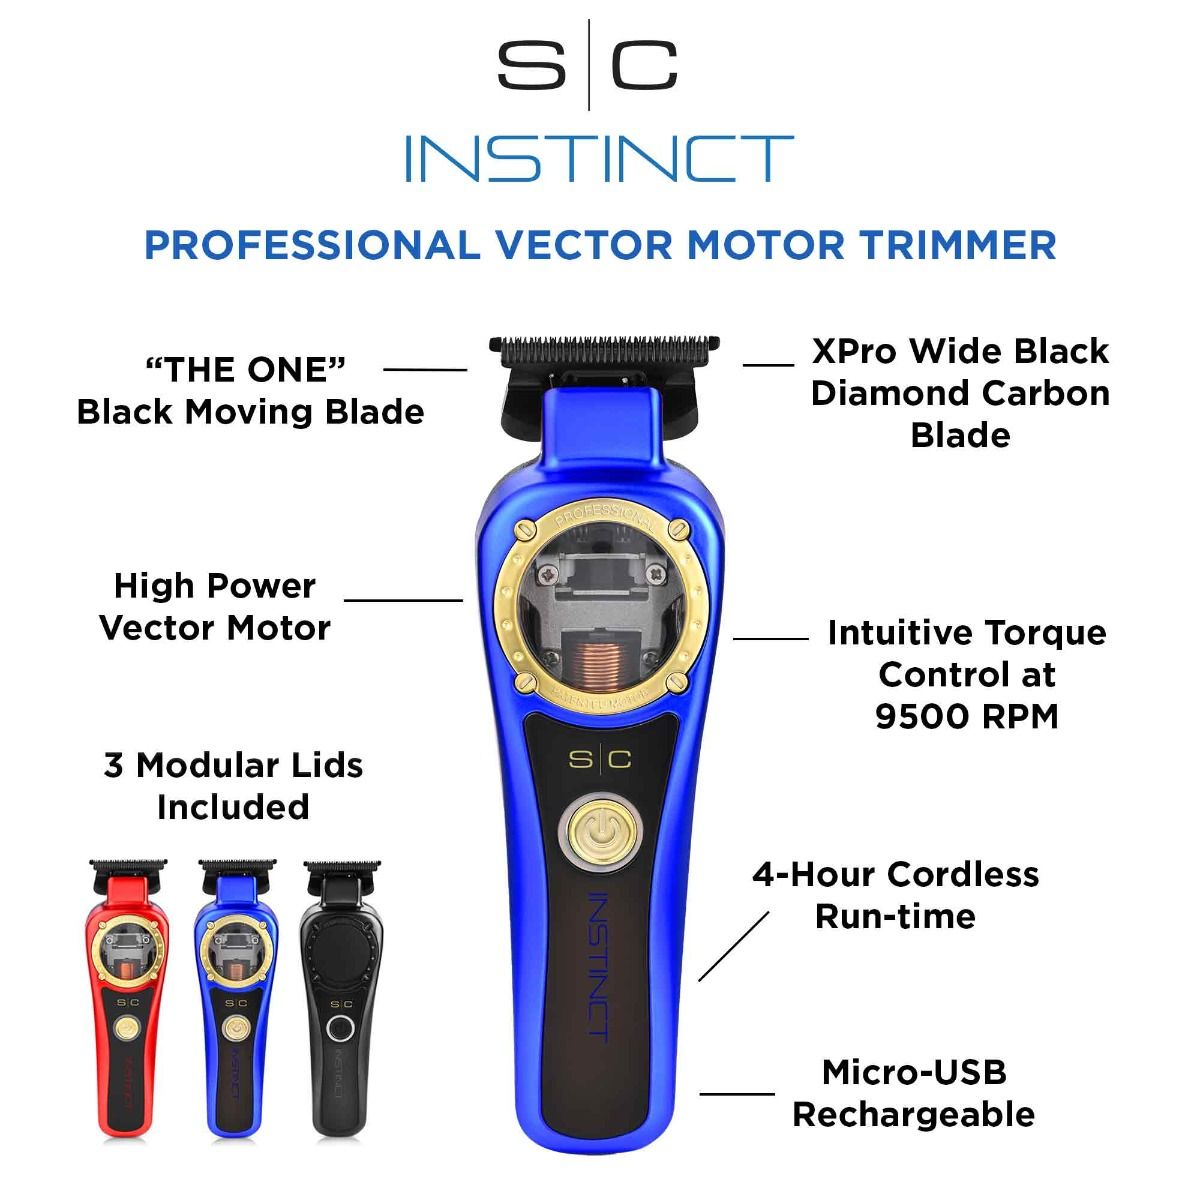 Instinct Professional Vector Motor Trimmer - Blend Box